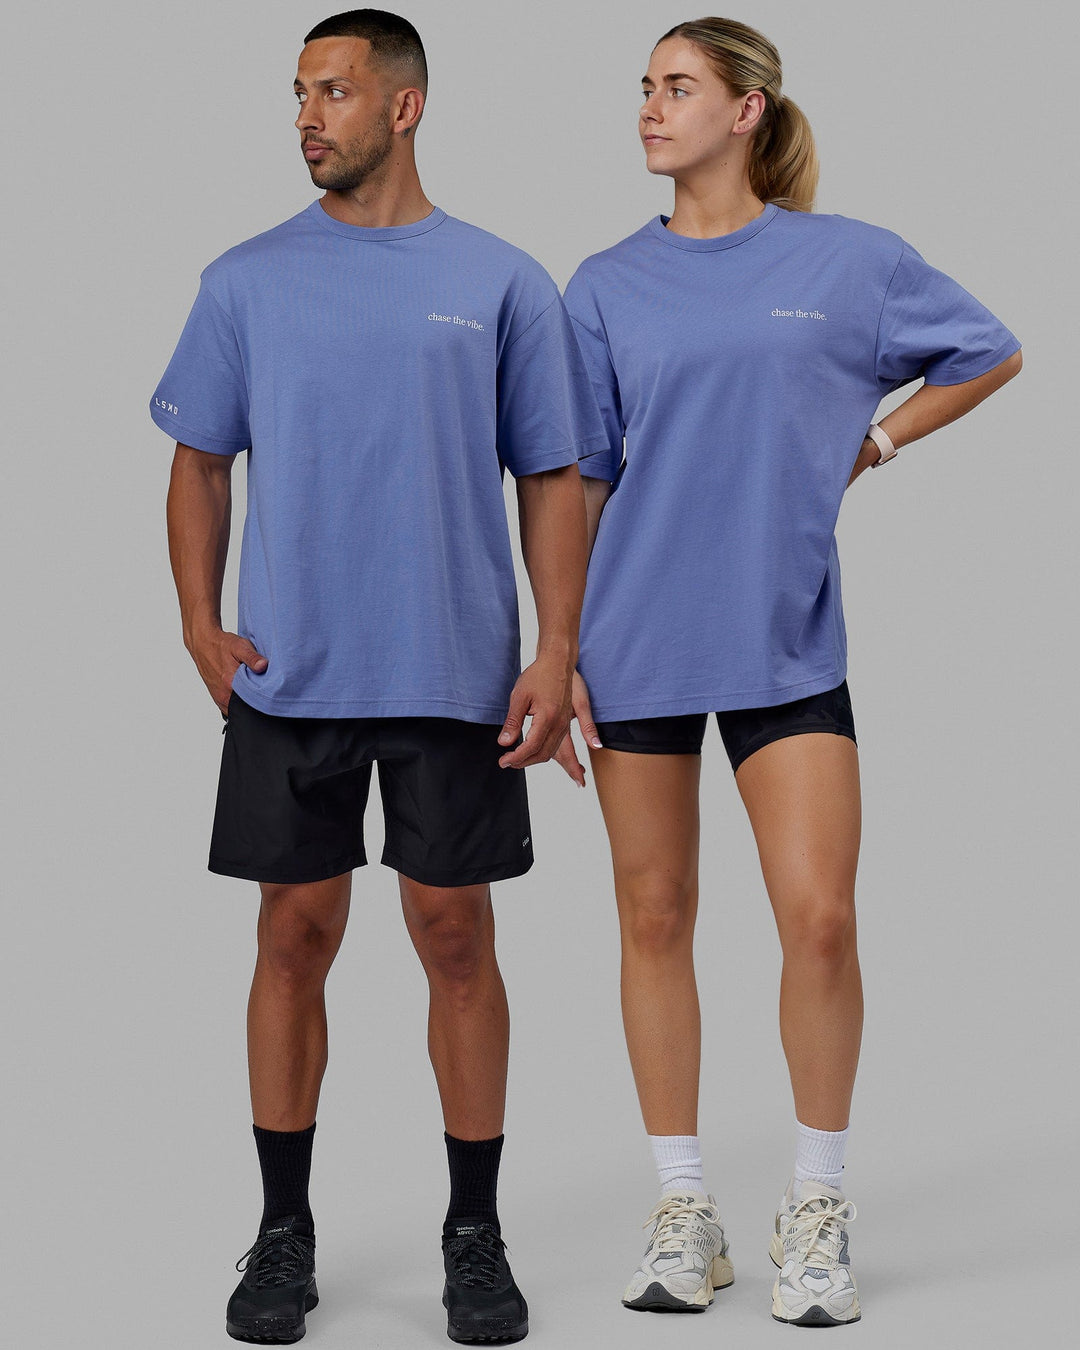 Duo wearing Unisex Taylor Tee Oversize - Cornflower Blue